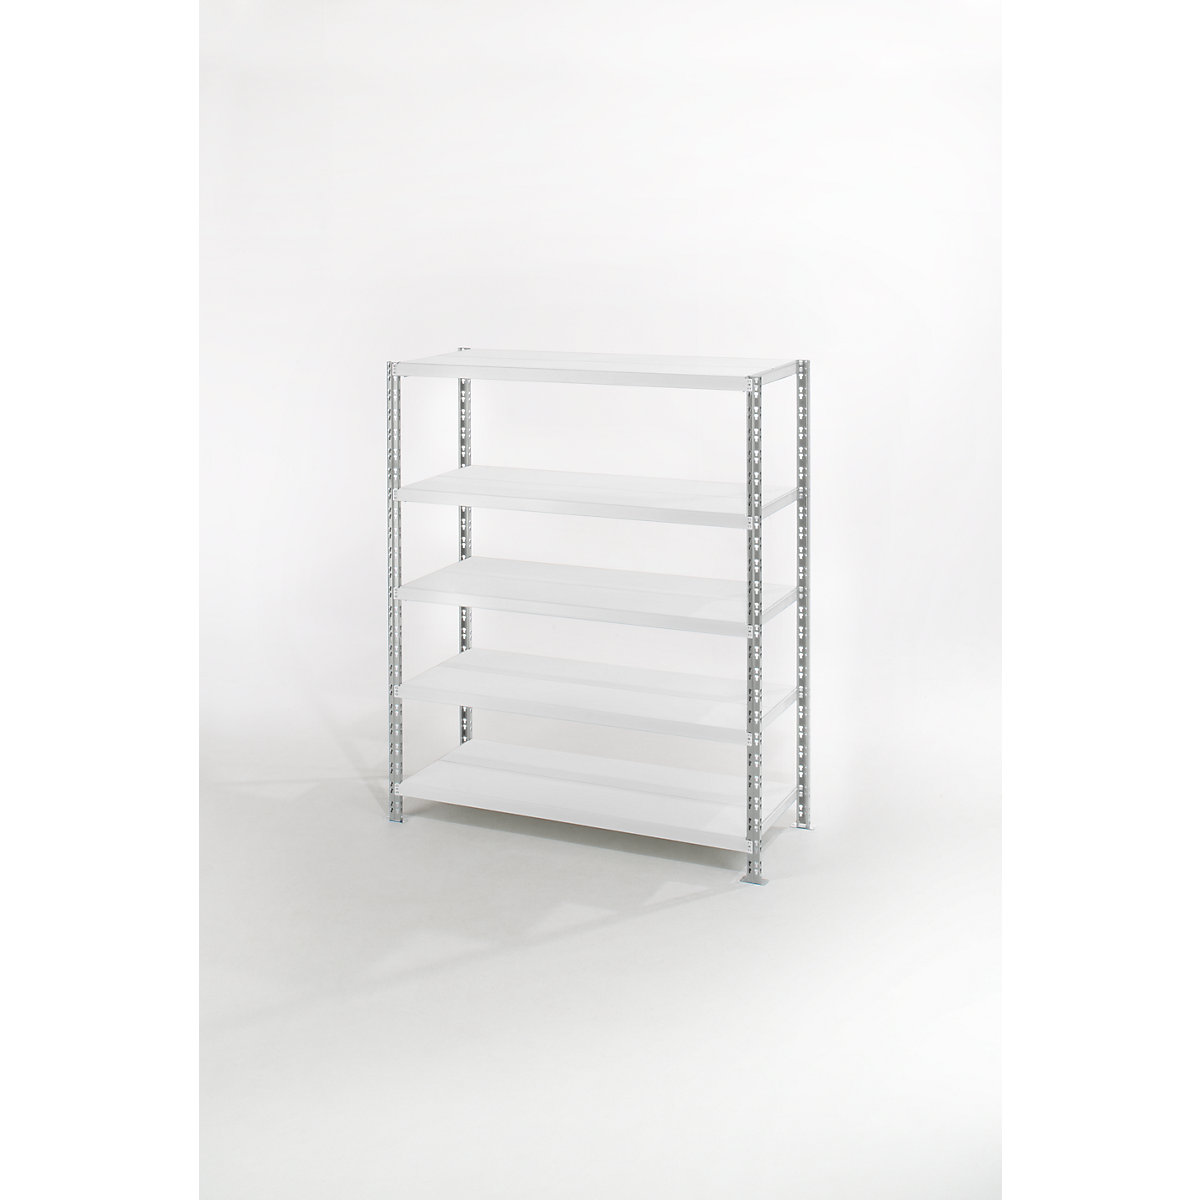 Wide span shelf unit with sheet steel shelves, depth 700 mm, standard shelf unit, HxW 1820 x 1550 mm